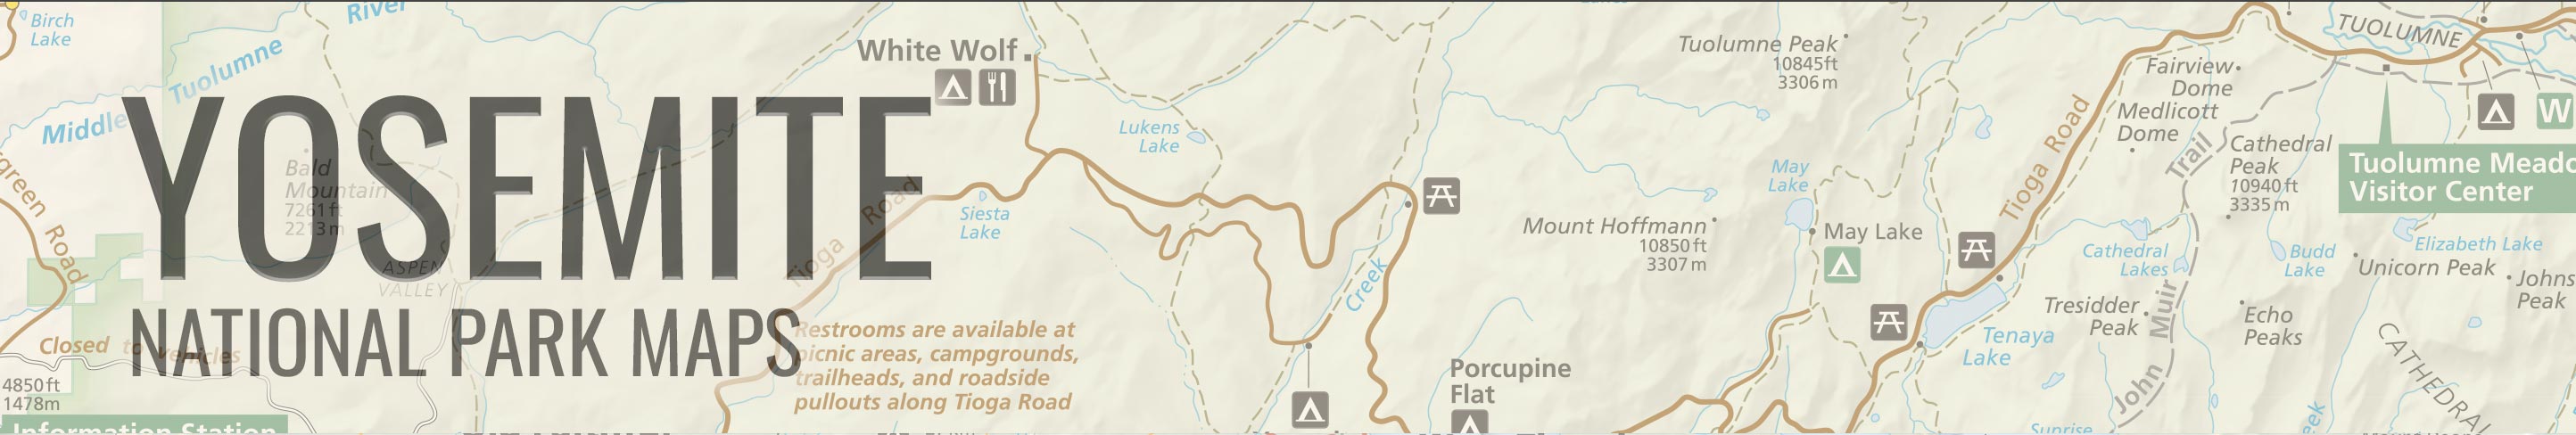 yosemite-national-park-maps-header